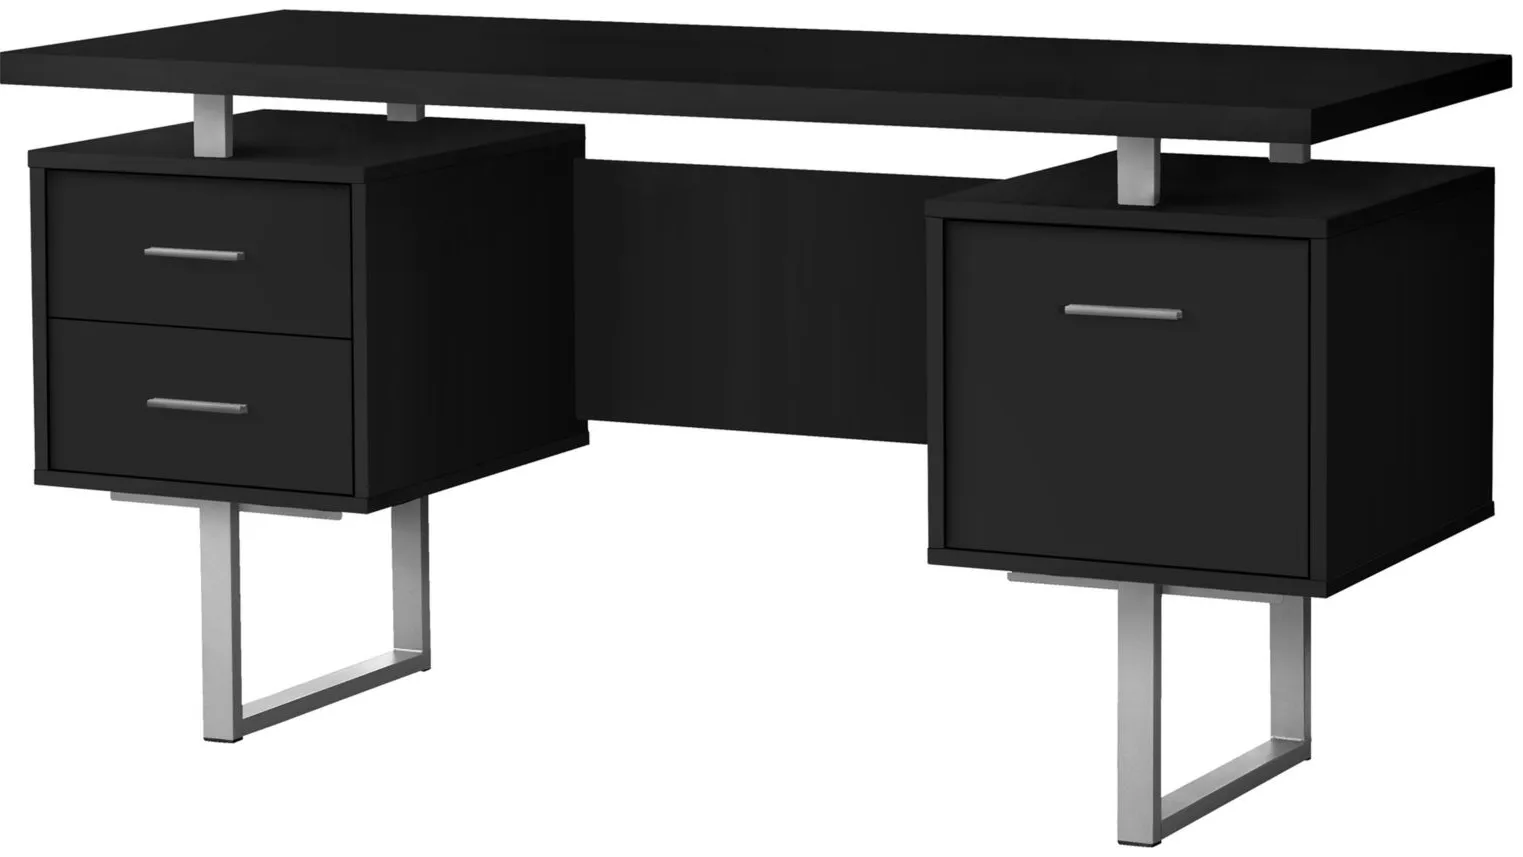 Grover Computer Desk with Floating Desktop in Black by Monarch Specialties